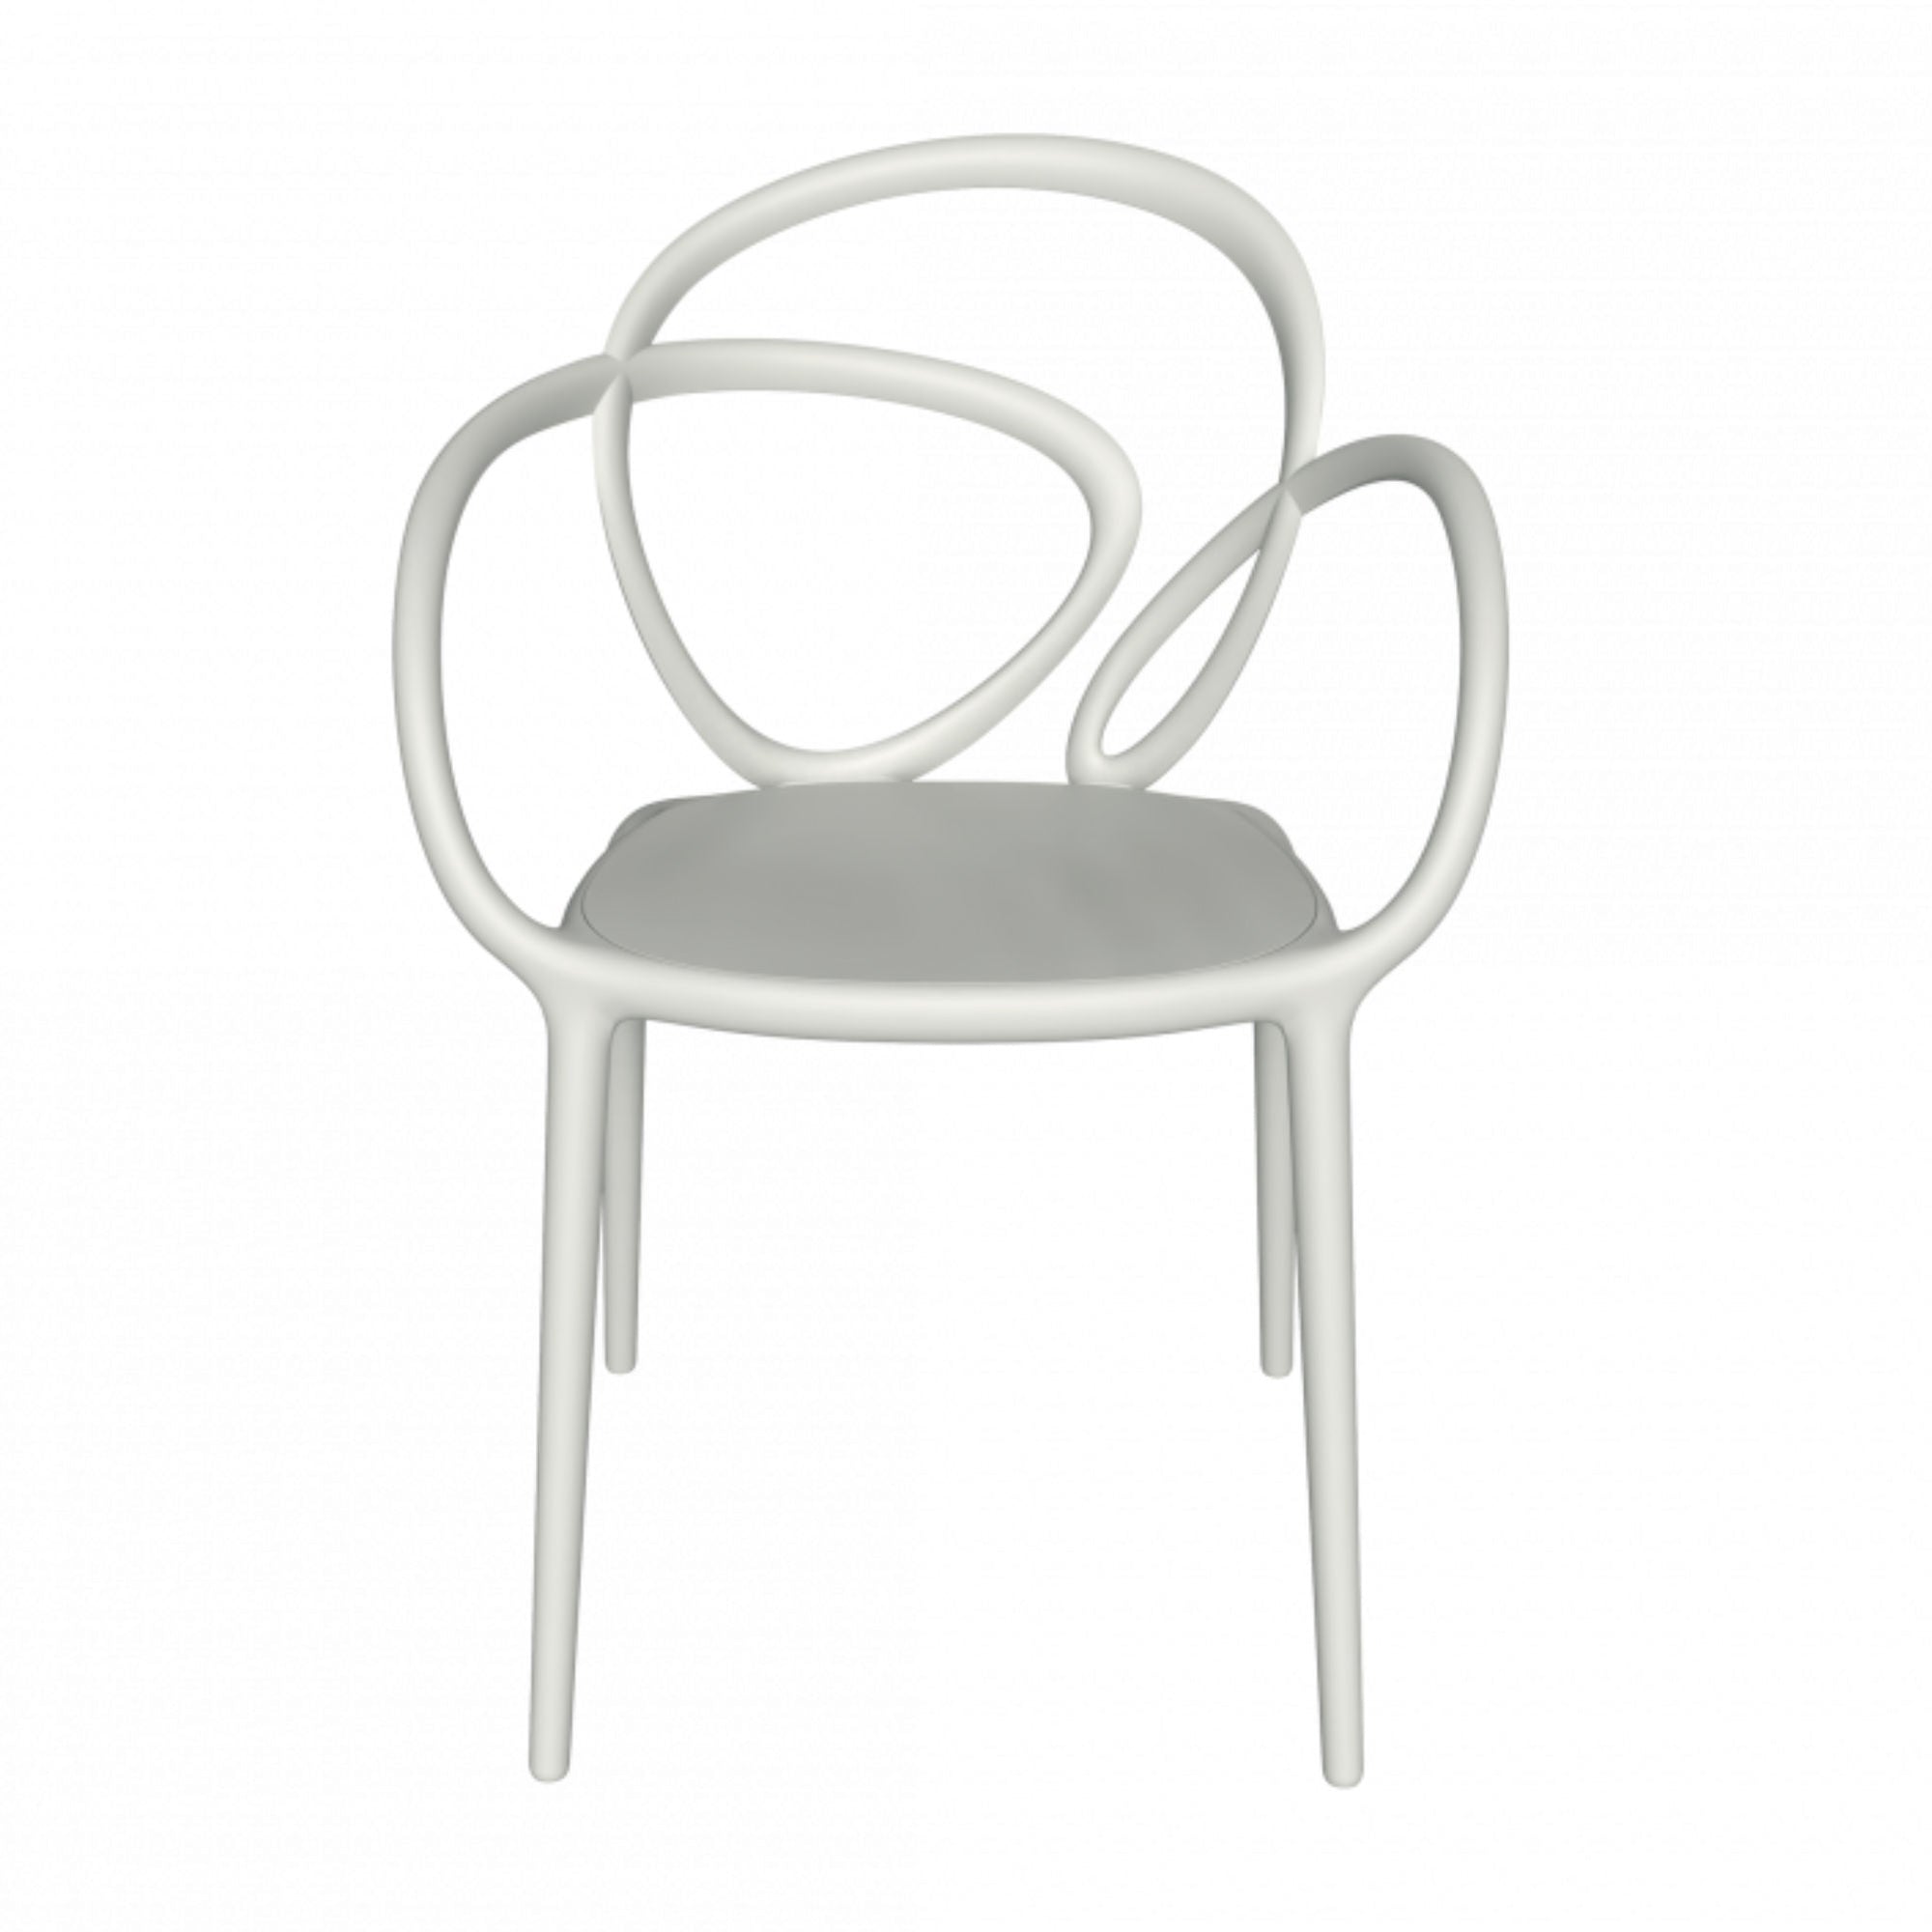 Qeeboo Loop chair, white (outdoor)